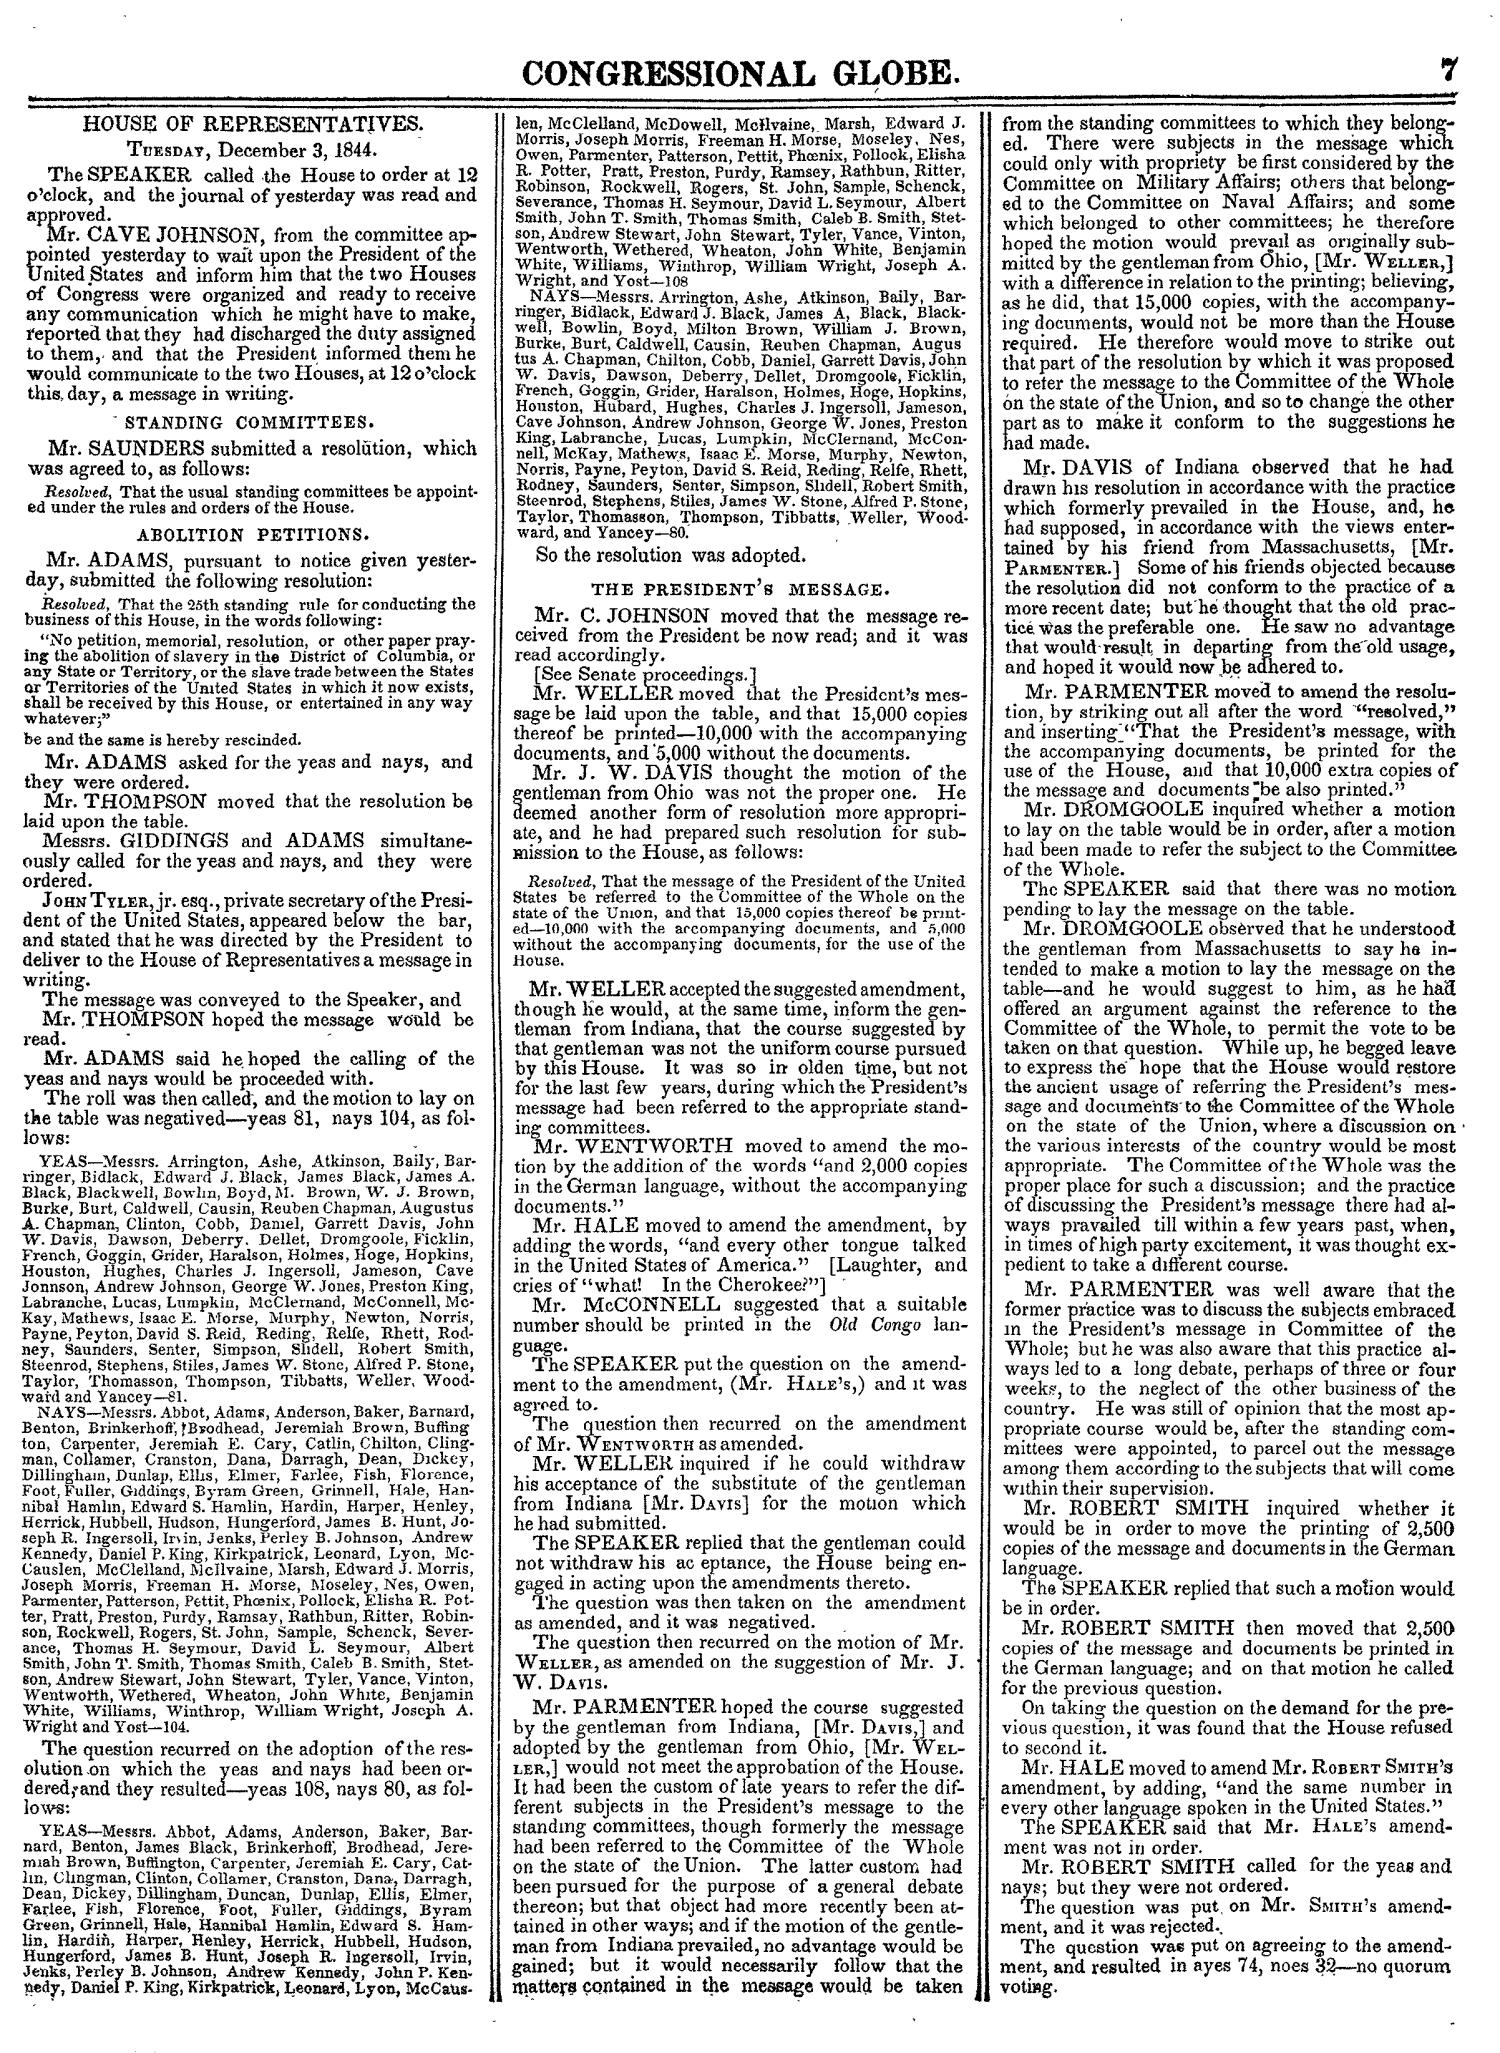 The Congressional Globe, Volume 14: Twenty-Eighth Congress, Second Session
                                                
                                                    7
                                                